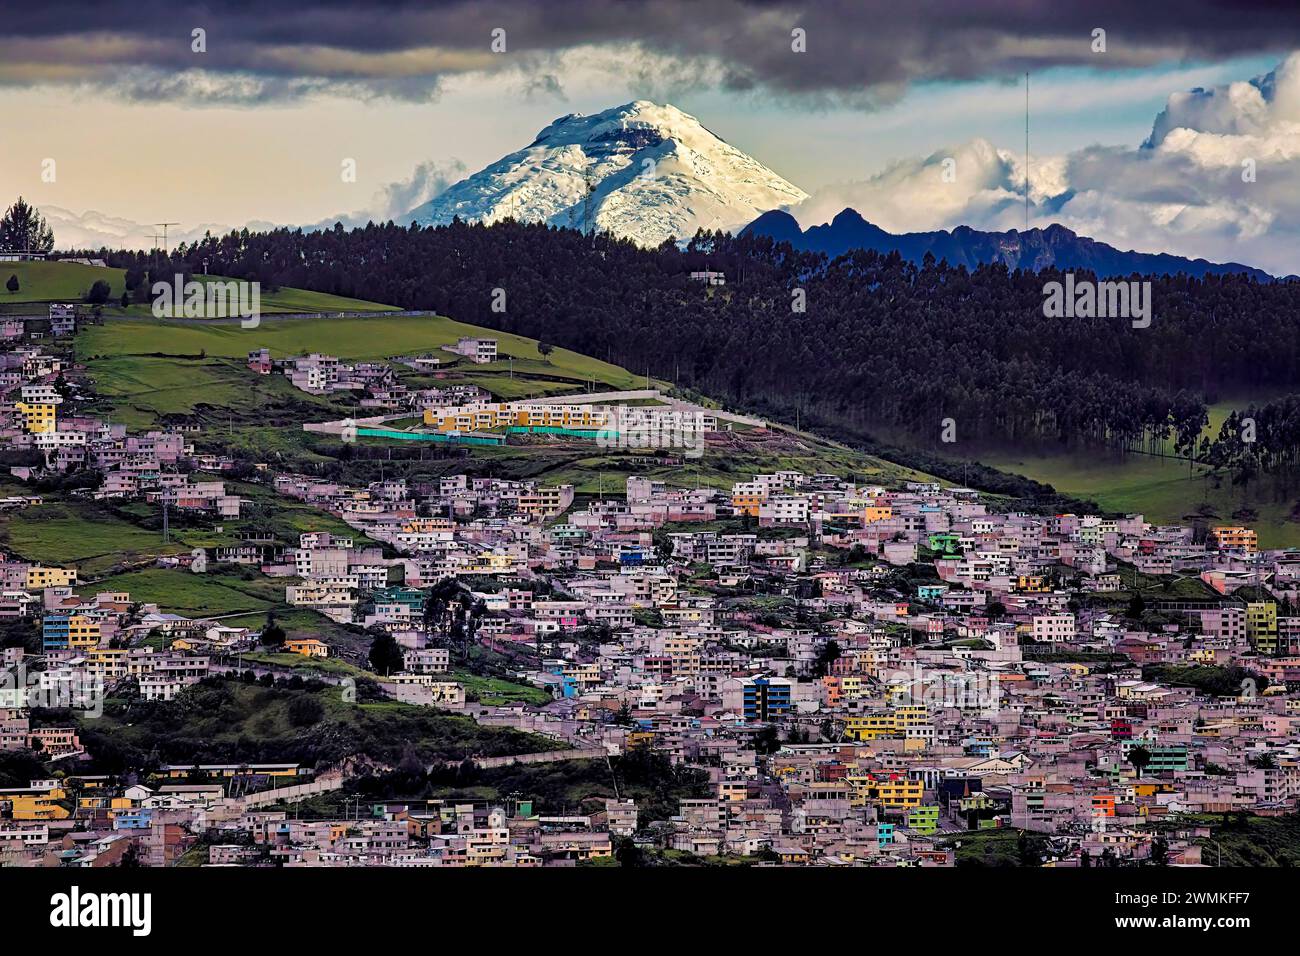 Vue de la ville de Quito de El Panecillo (de l'espagnol panecillo petit morceau de pain, diminutif de pain de poêle) qui est une colline de 200 mètres de haut o... Banque D'Images